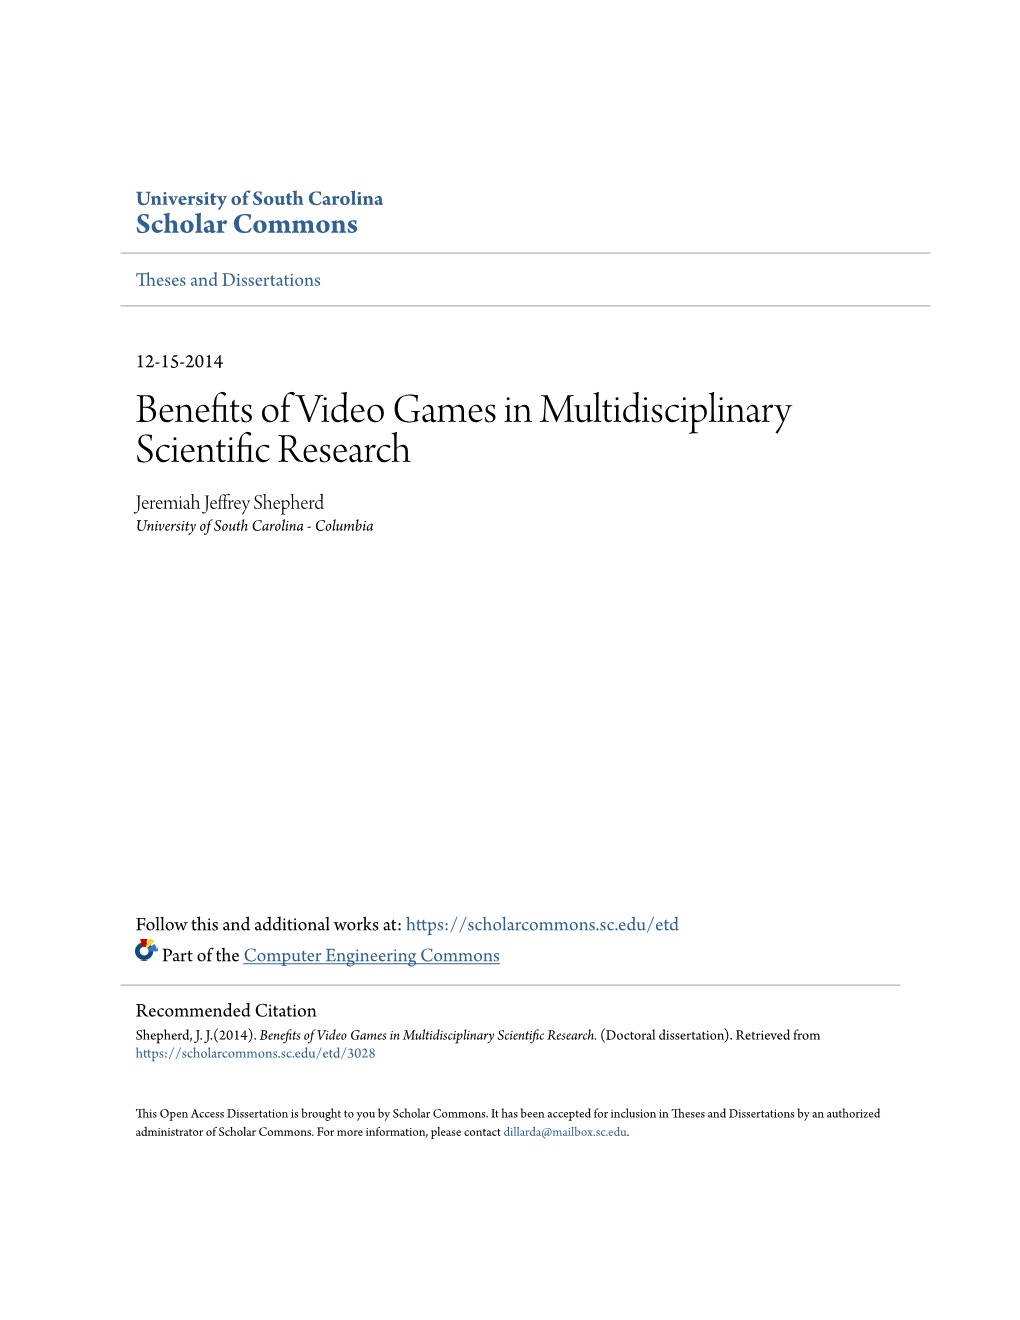 Benefits of Video Games in Multidisciplinary Scientific Research Jeremiah Jeffrey Shepherd University of South Carolina - Columbia